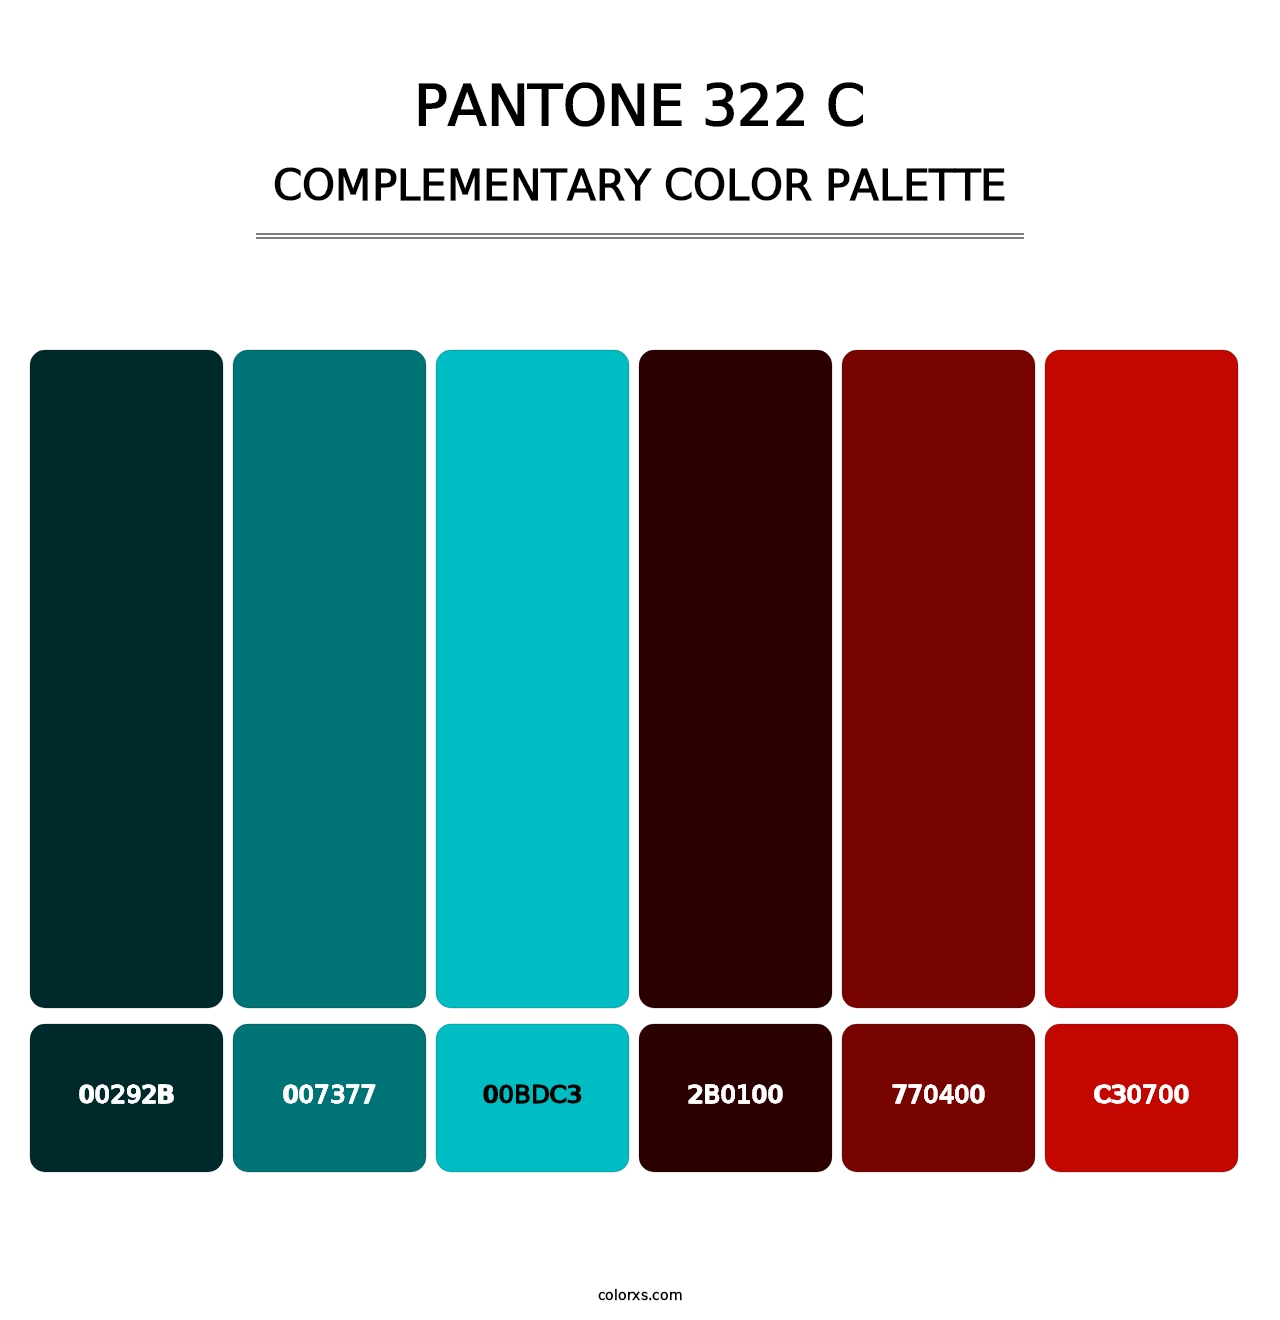 PANTONE 322 C - Complementary Color Palette